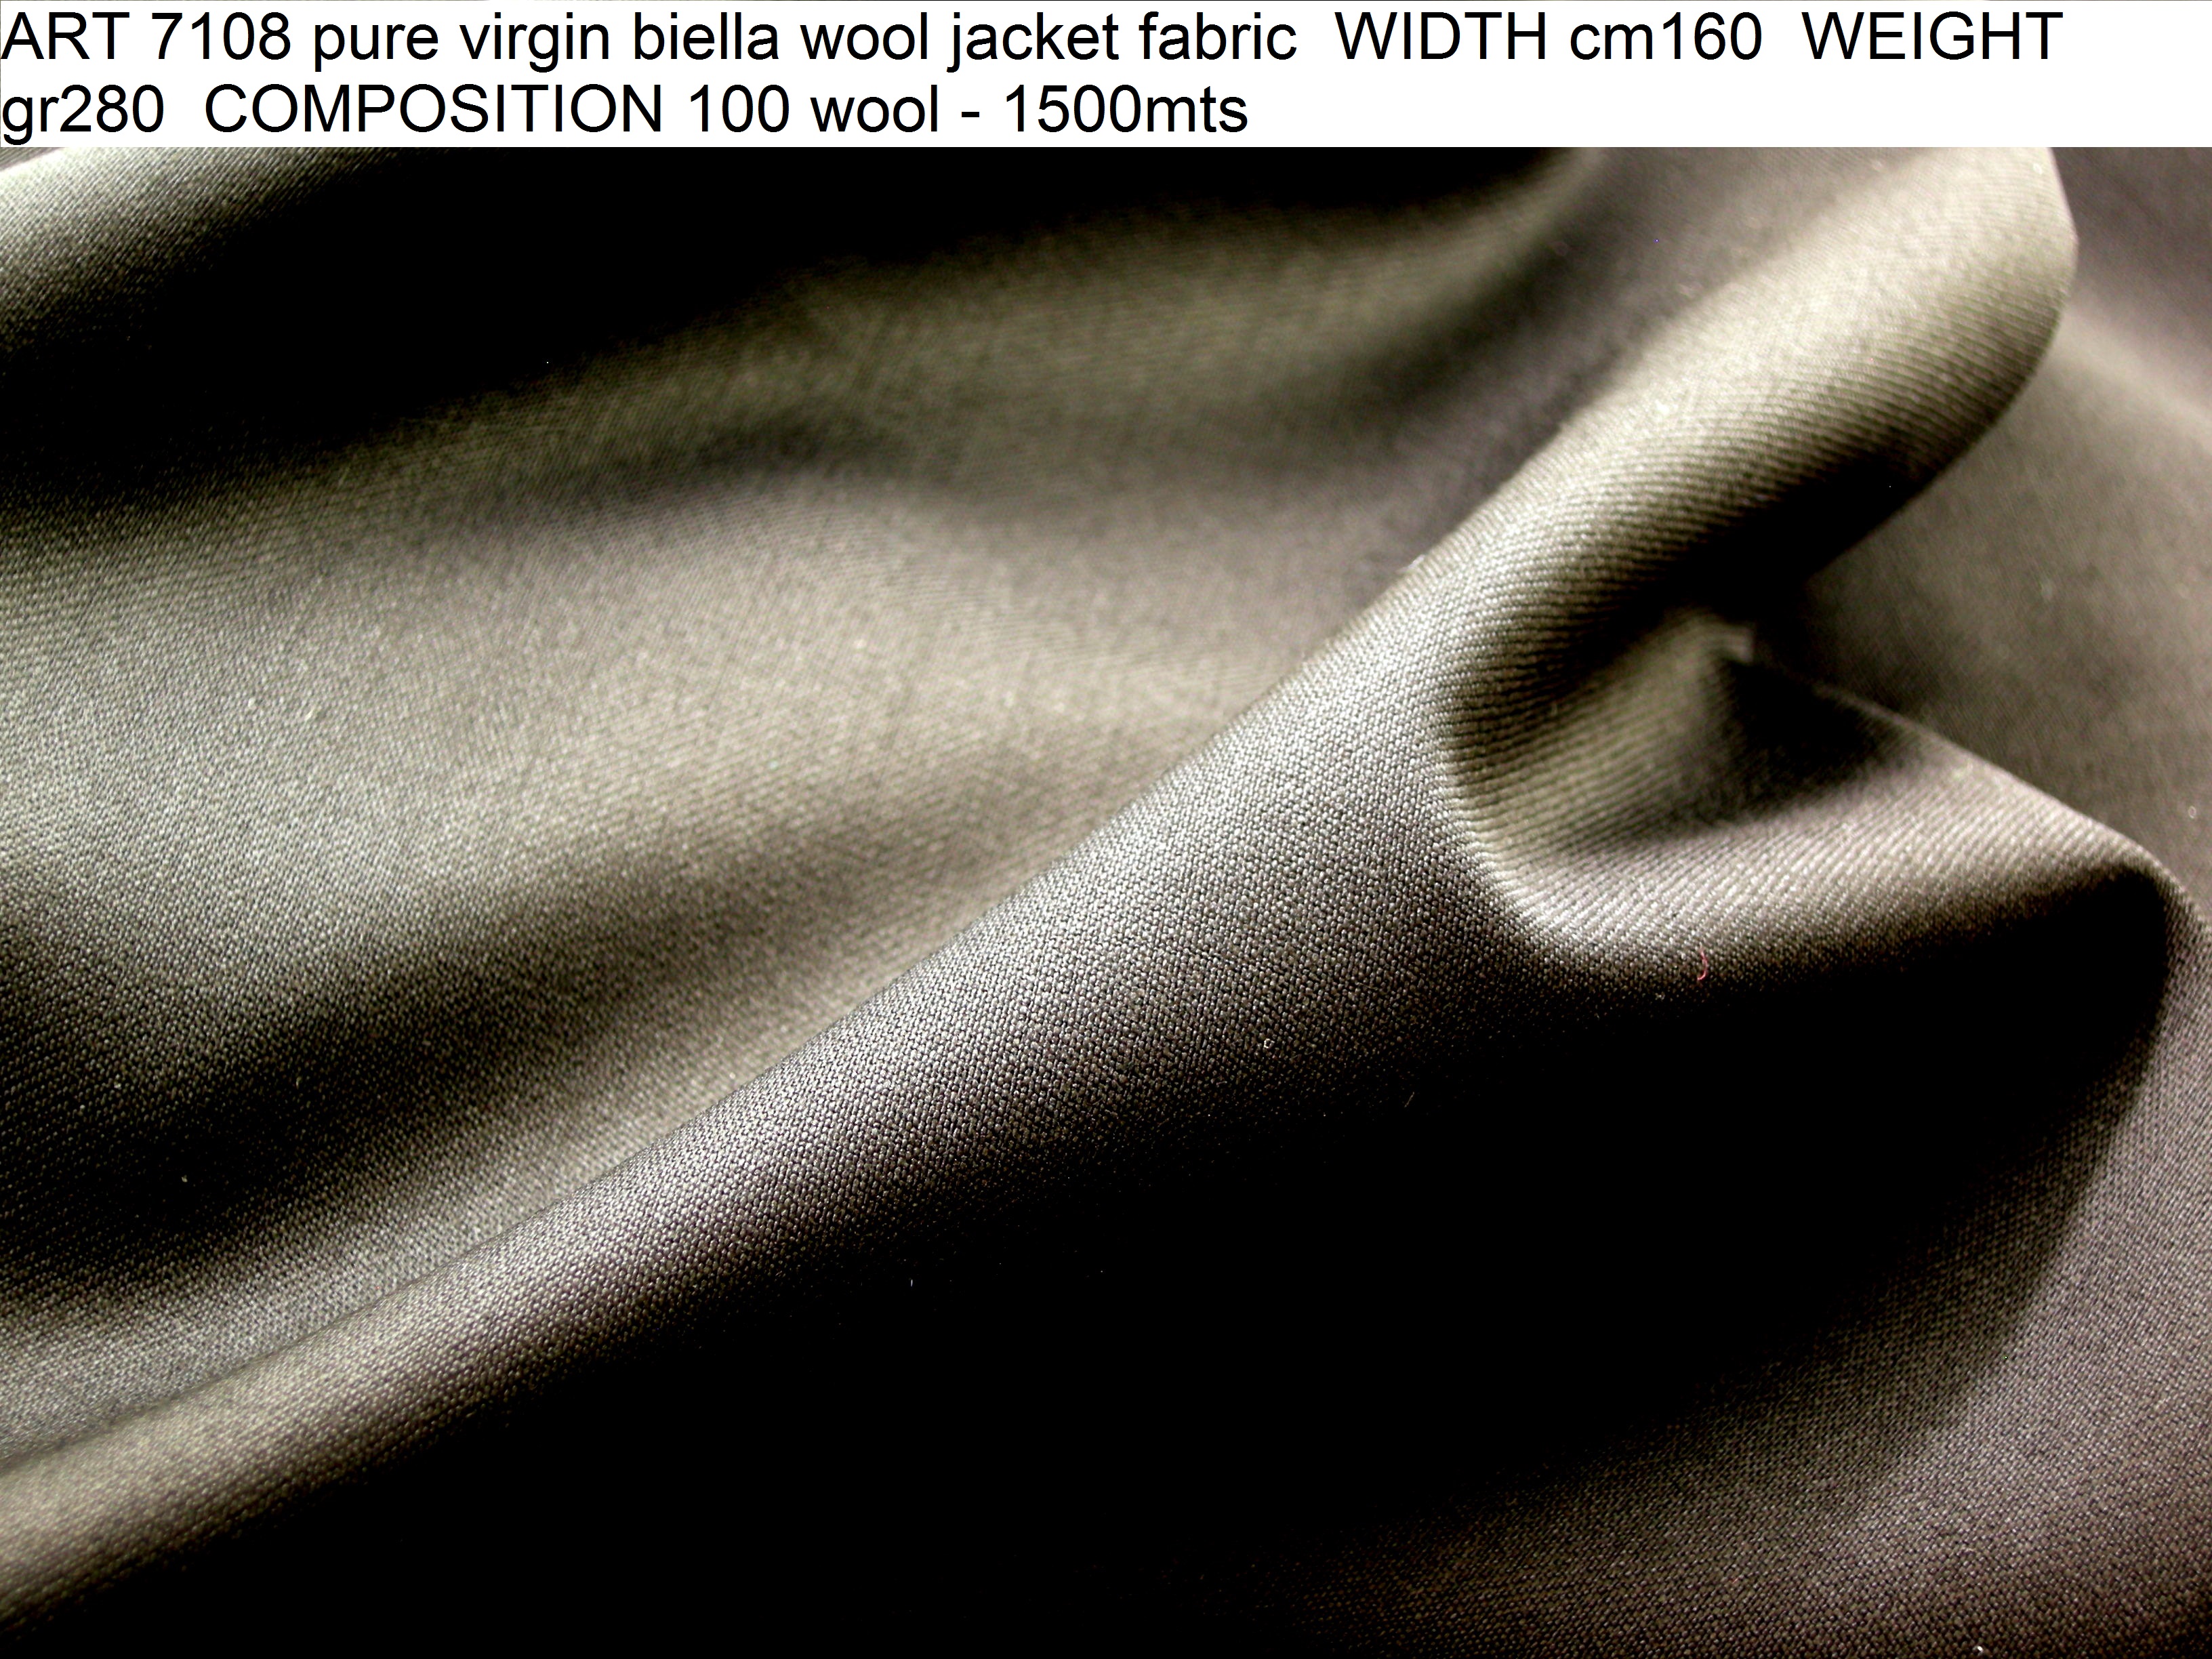 ART 7108 pure virgin biella wool jacket fabric WIDTH cm160 WEIGHT gr280 COMPOSITION 100 wool - 1500mts